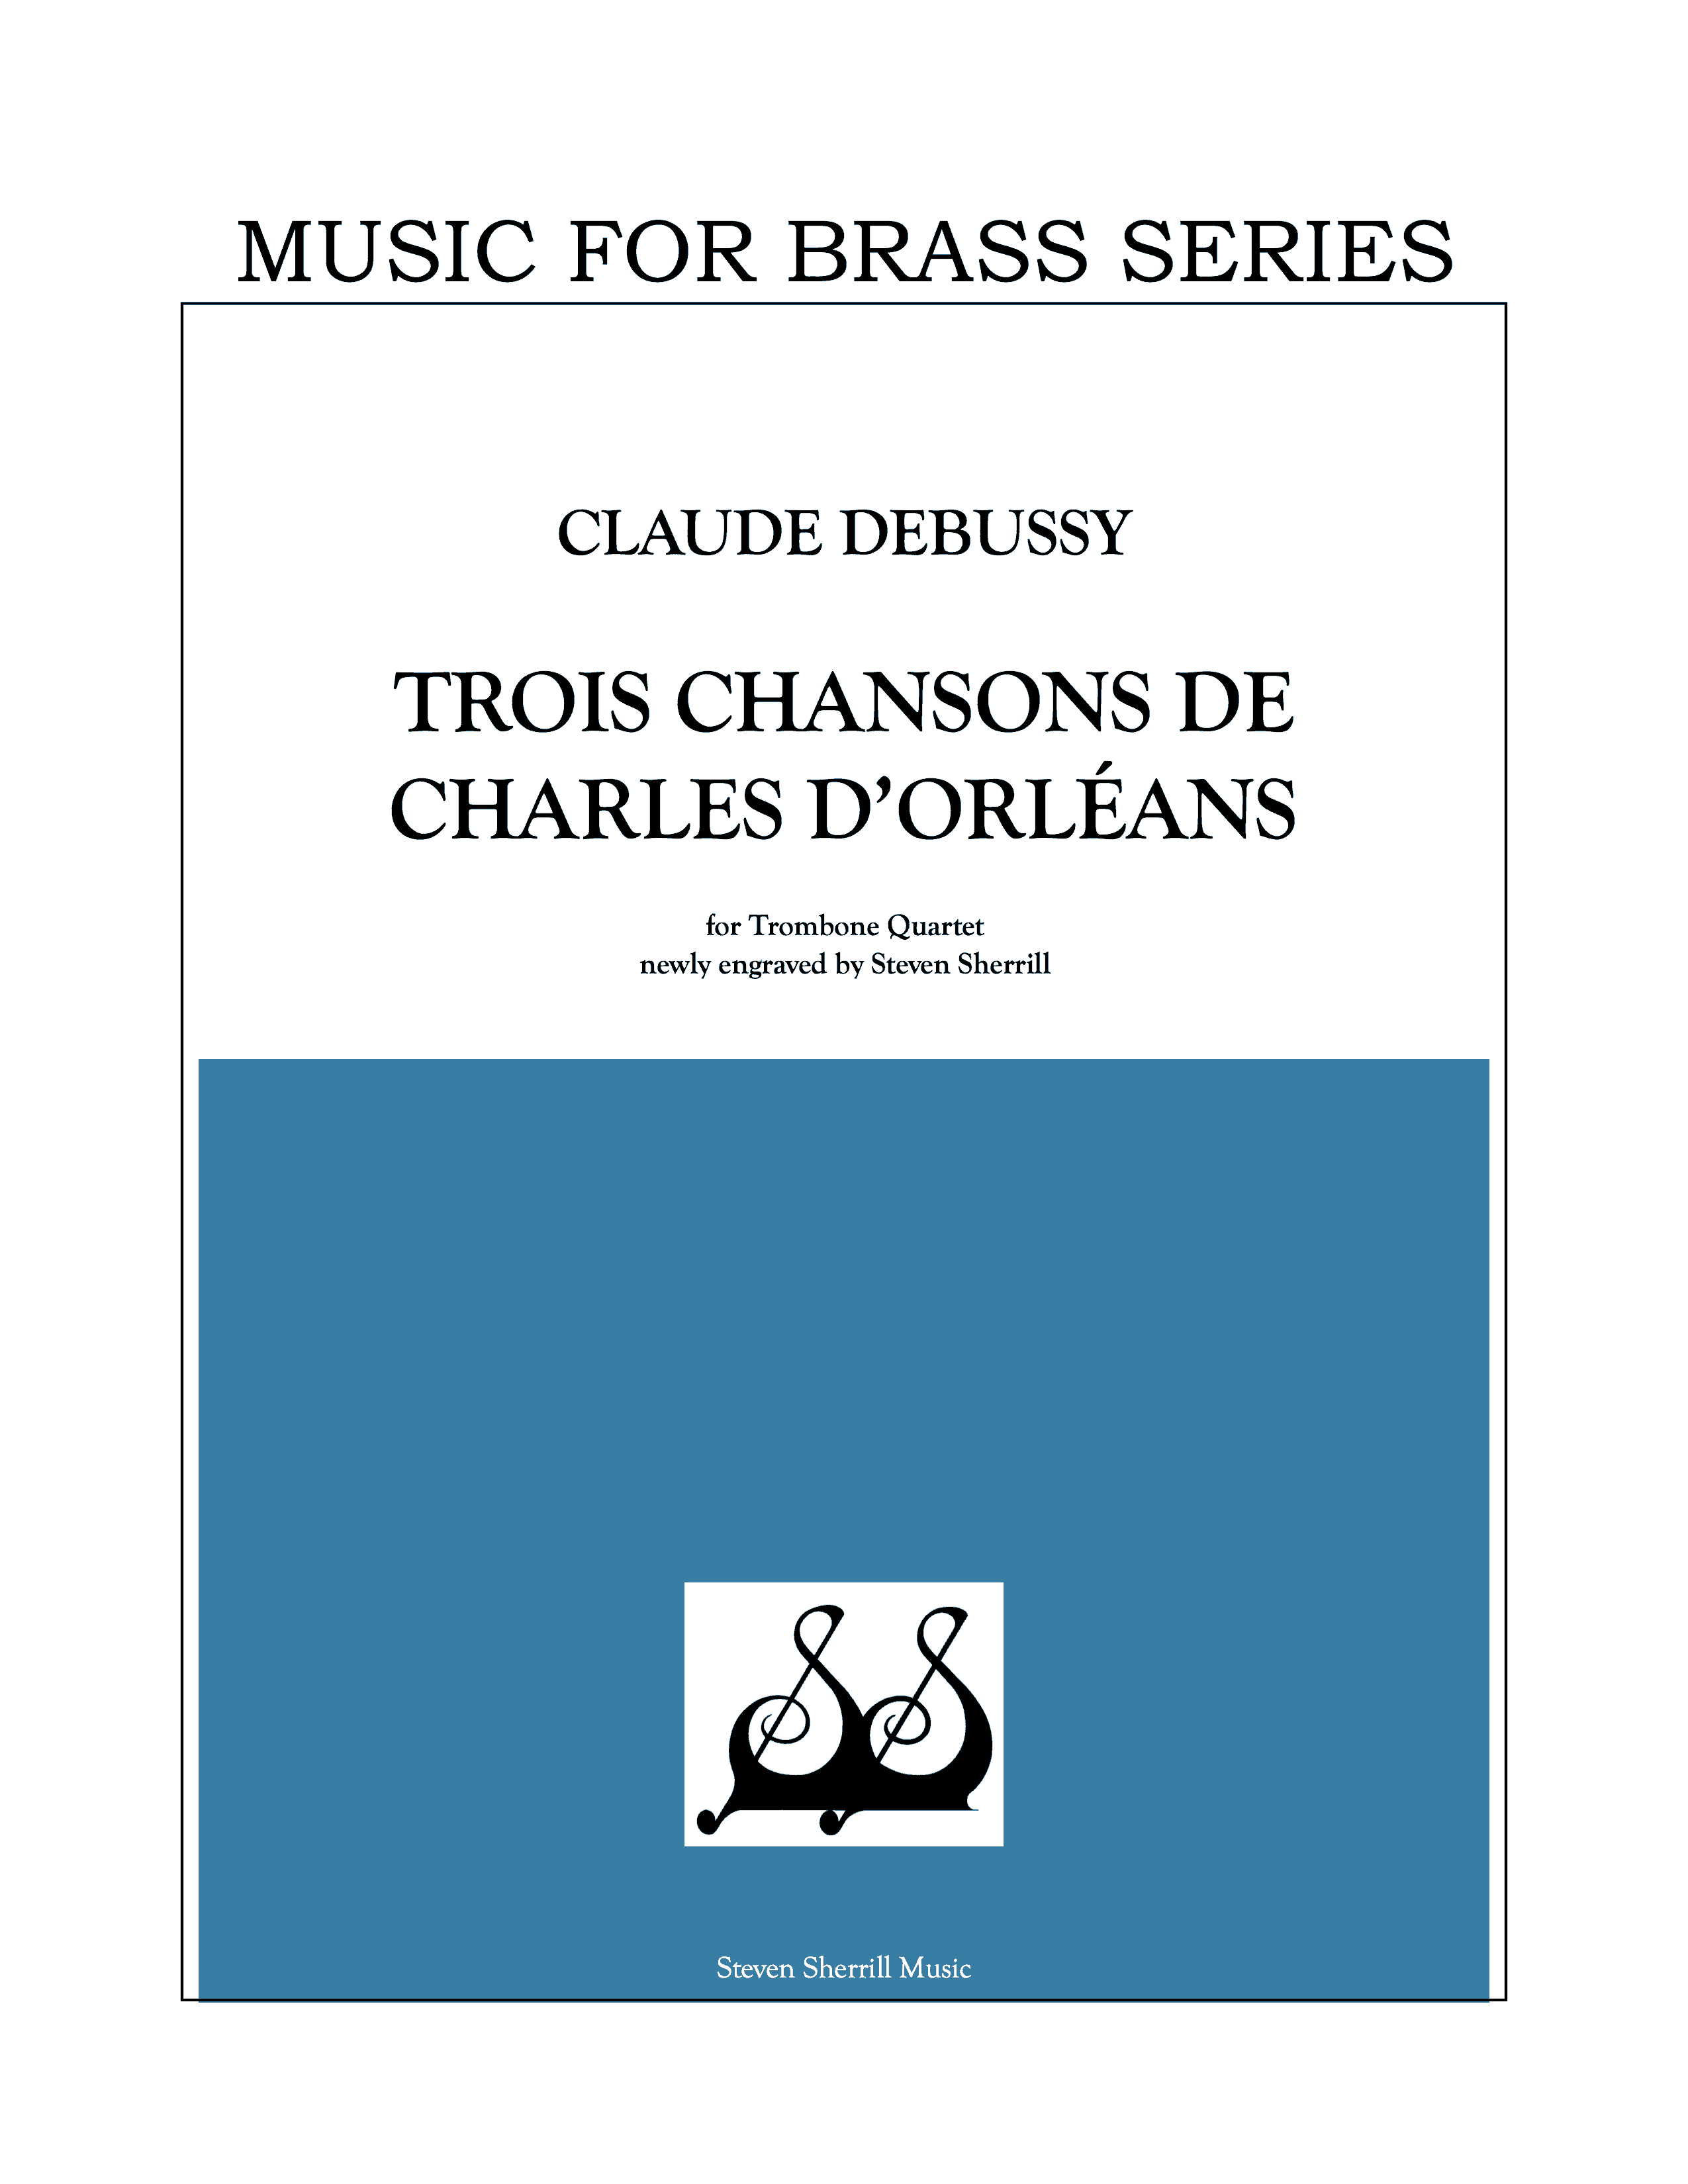 Trois Chansons de Charles d'Orlans cover page